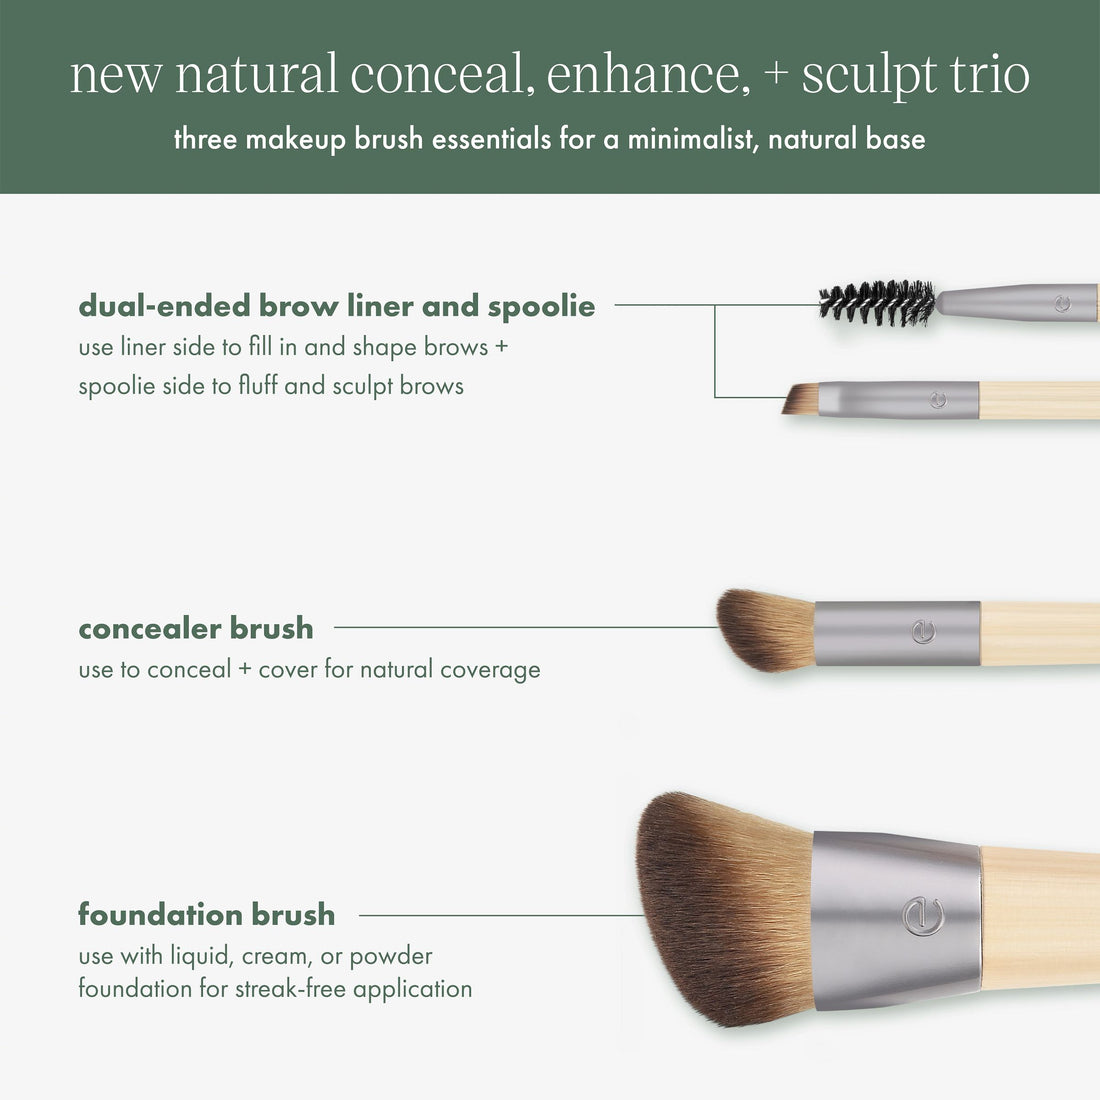 New Natural Conceal, Enhance, & Sculpt Trio